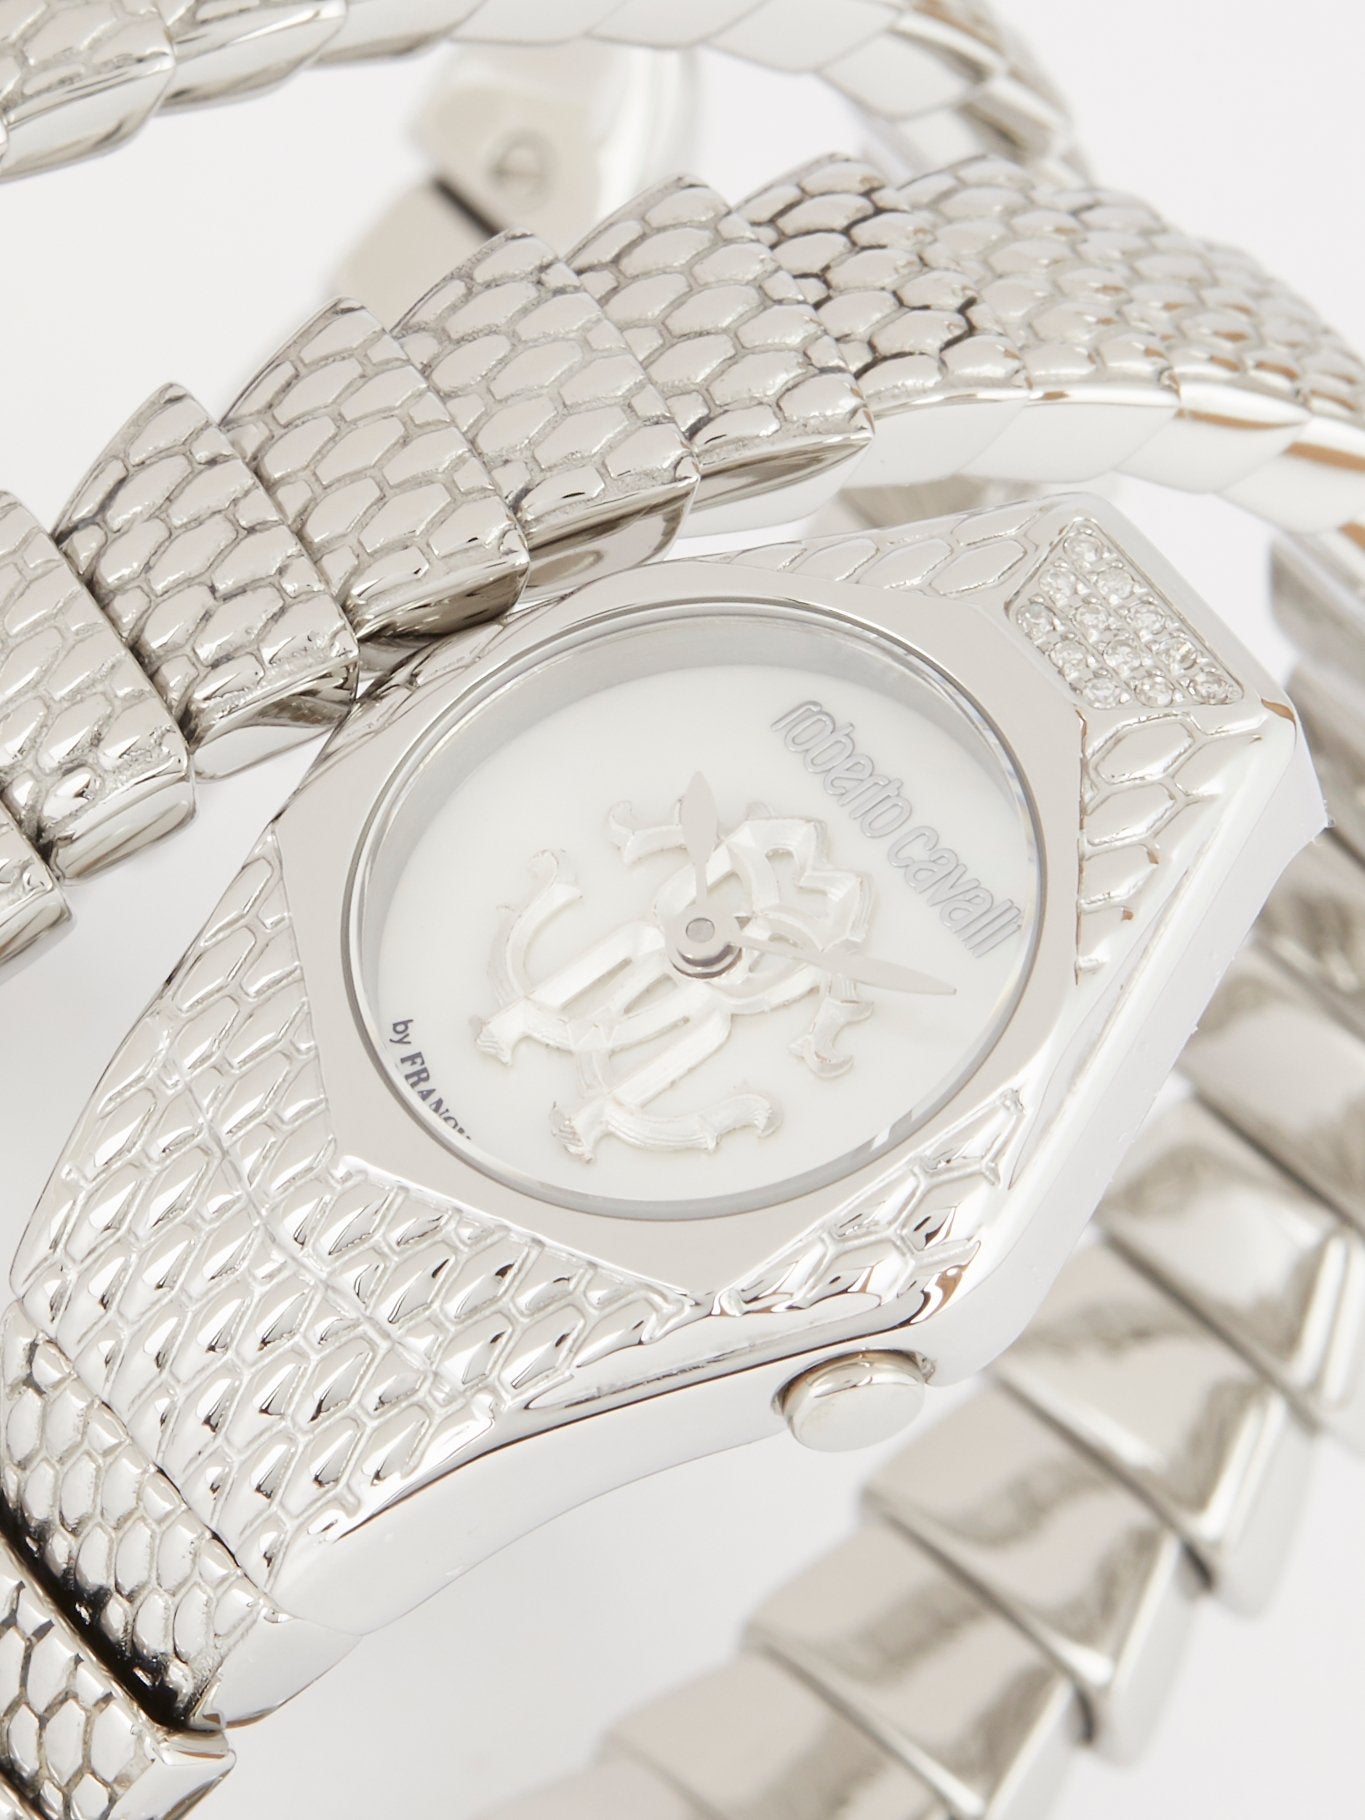 Roberto Cavalli by Franck Muller Silver Snake Spiral Bracelet Watch